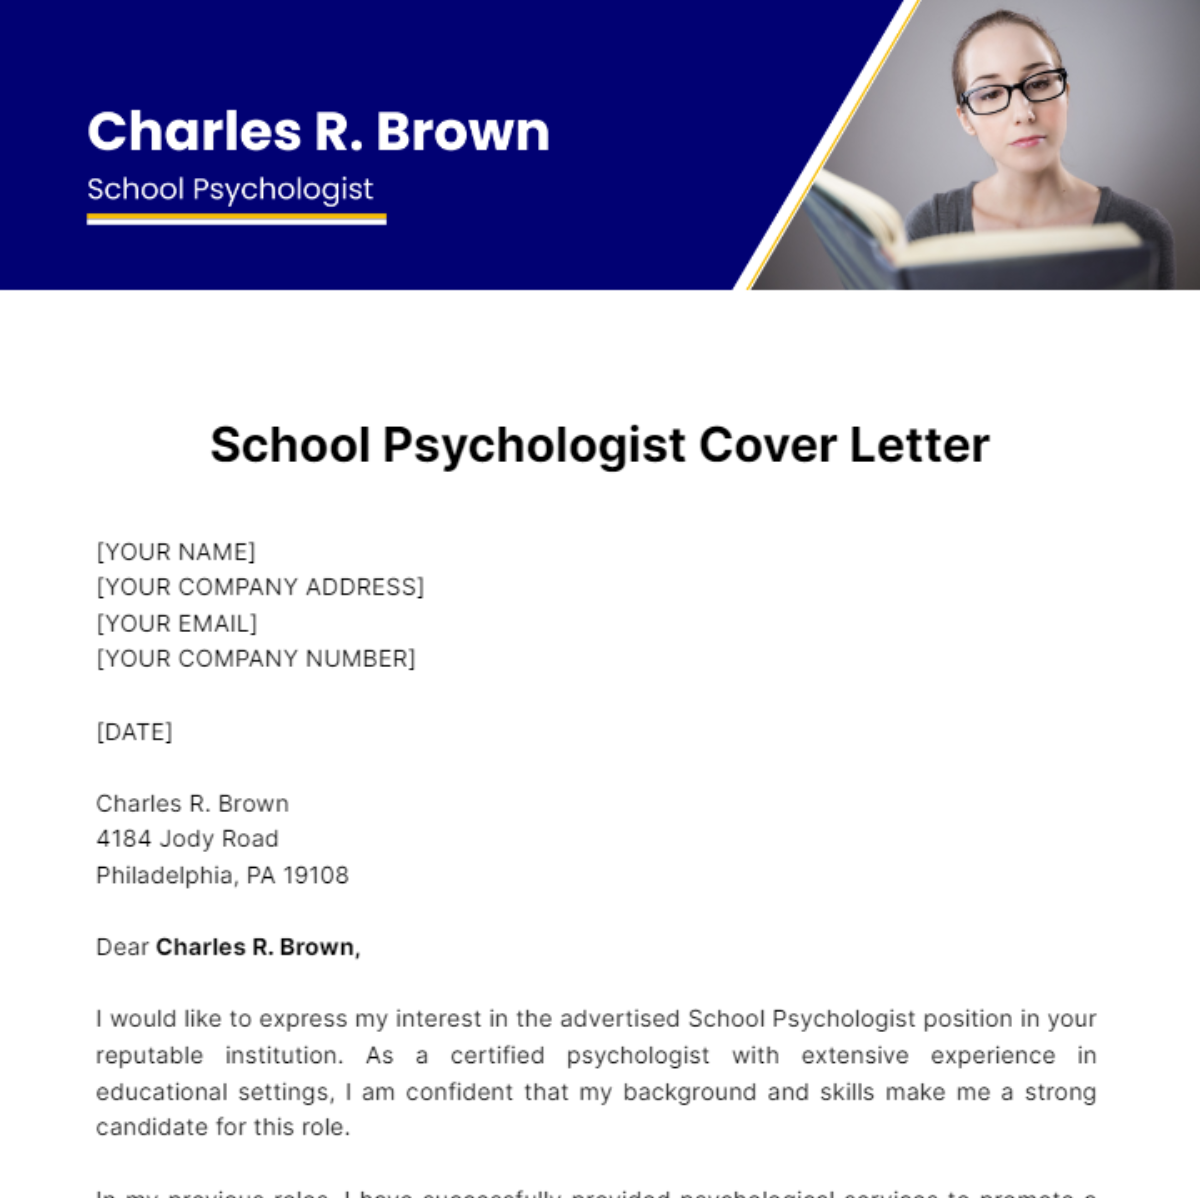 School Psychologist Cover Letter Template